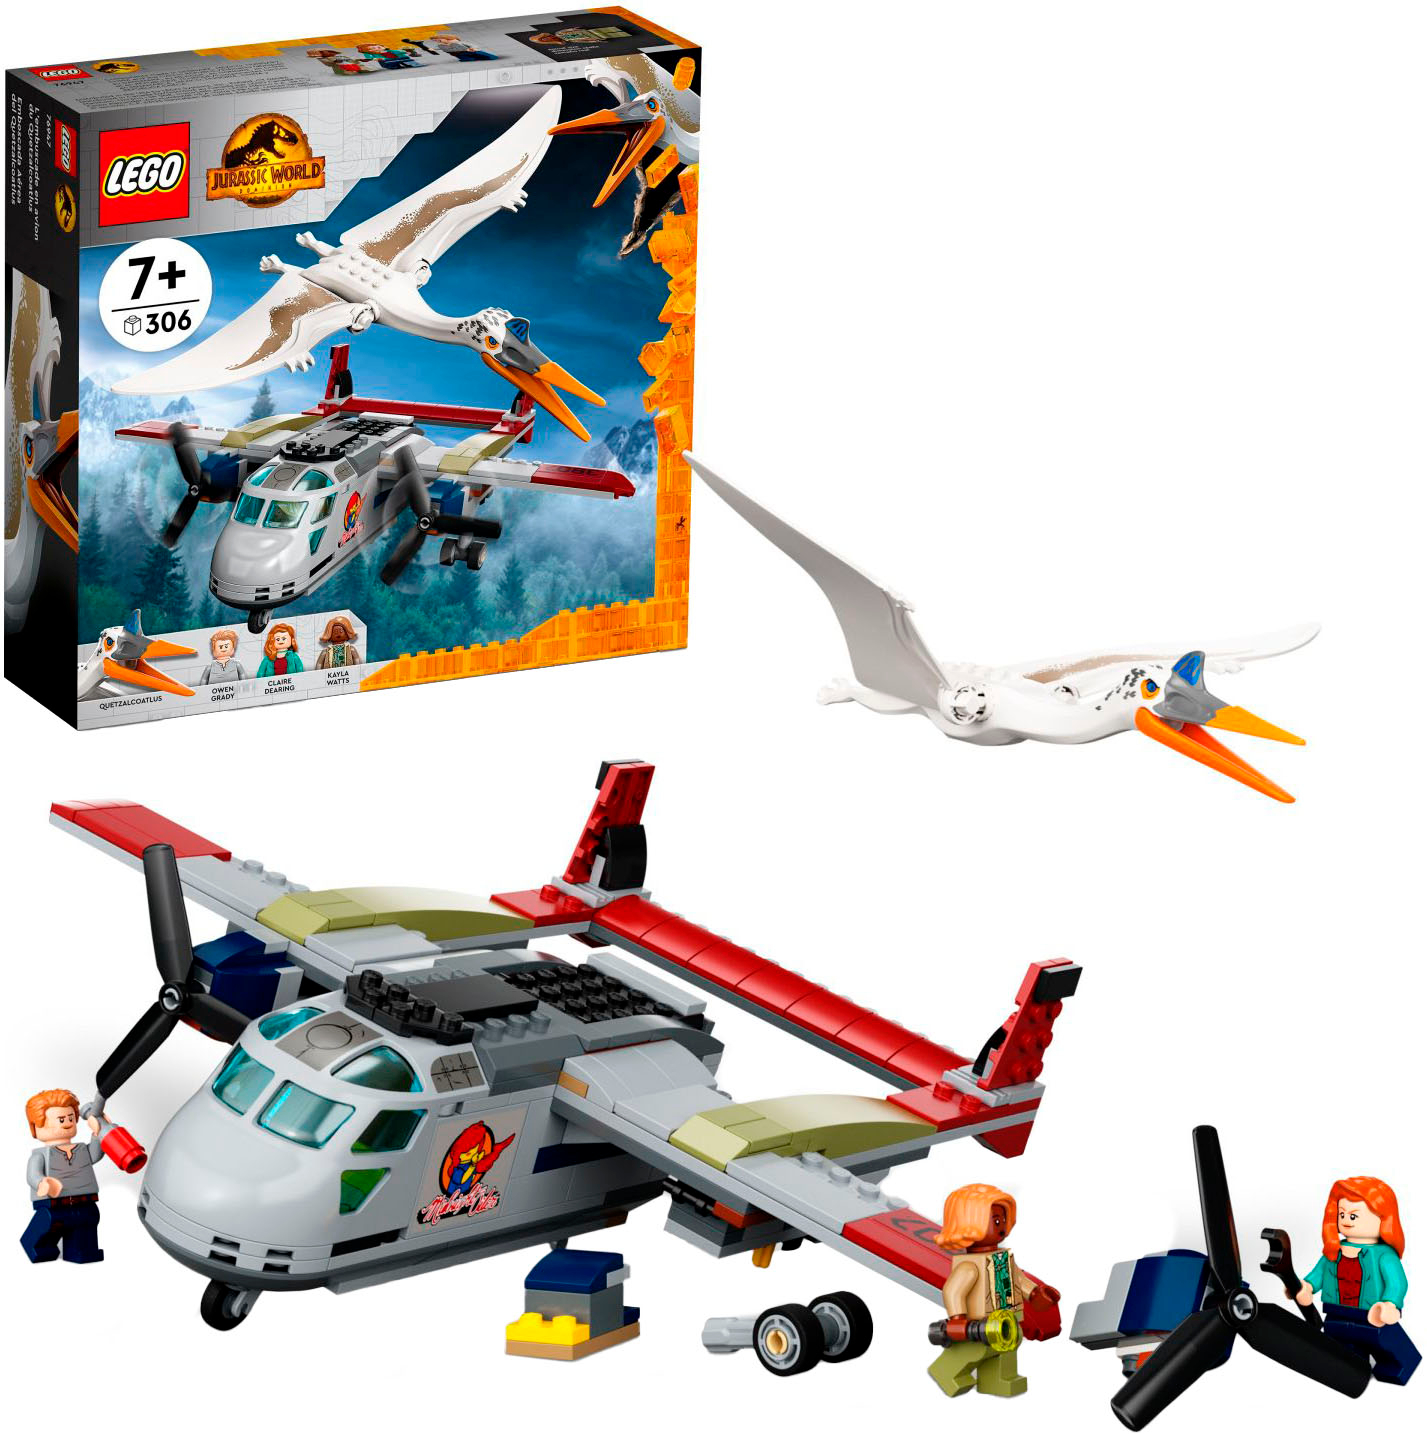 LEGO Jurassic World Quetzalcoatlus Plane Ambush 76947 Building Kit (306 Pieces) 6332799 - Buy